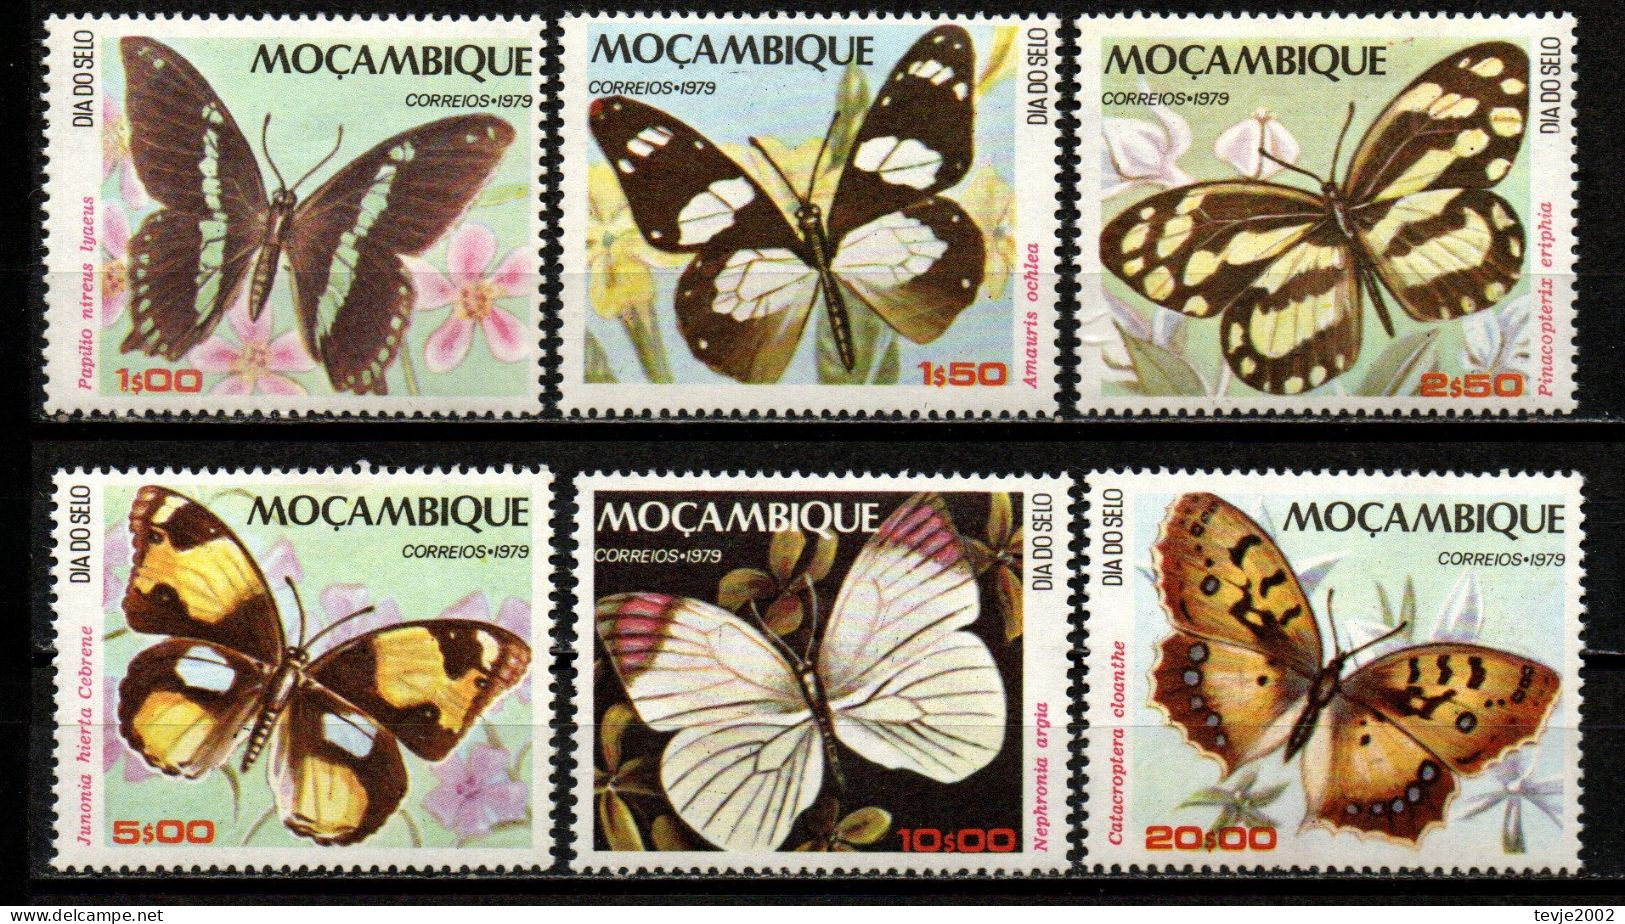 Moçambique 1979 - Mi.Nr. 731 - 736 - Postfrisch MNH - Tiere Animals Schmetterlinge Butterflies - Papillons